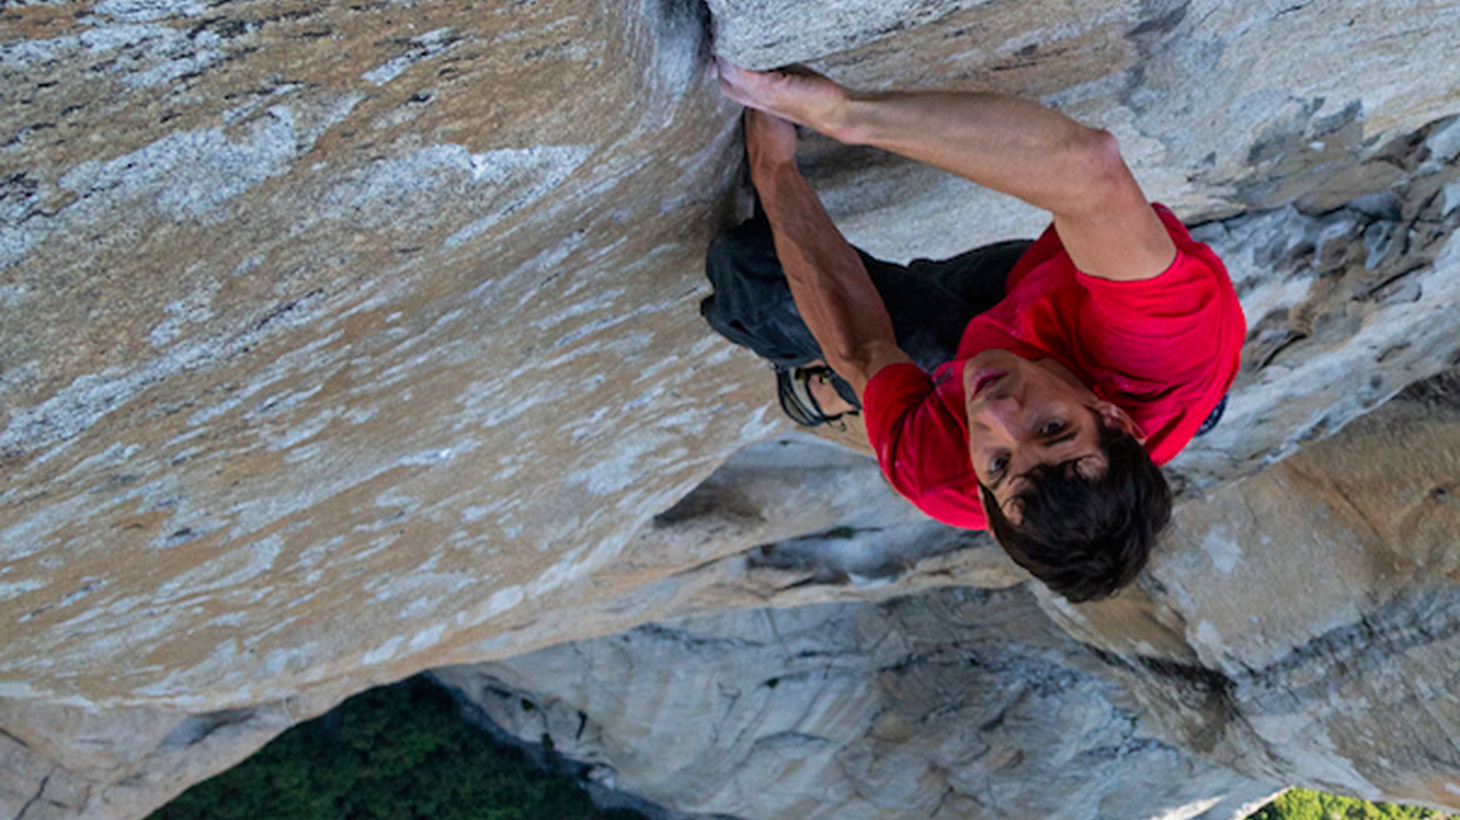 Will the cameras kill Alex Honnold on his free solo climb of El Cap?